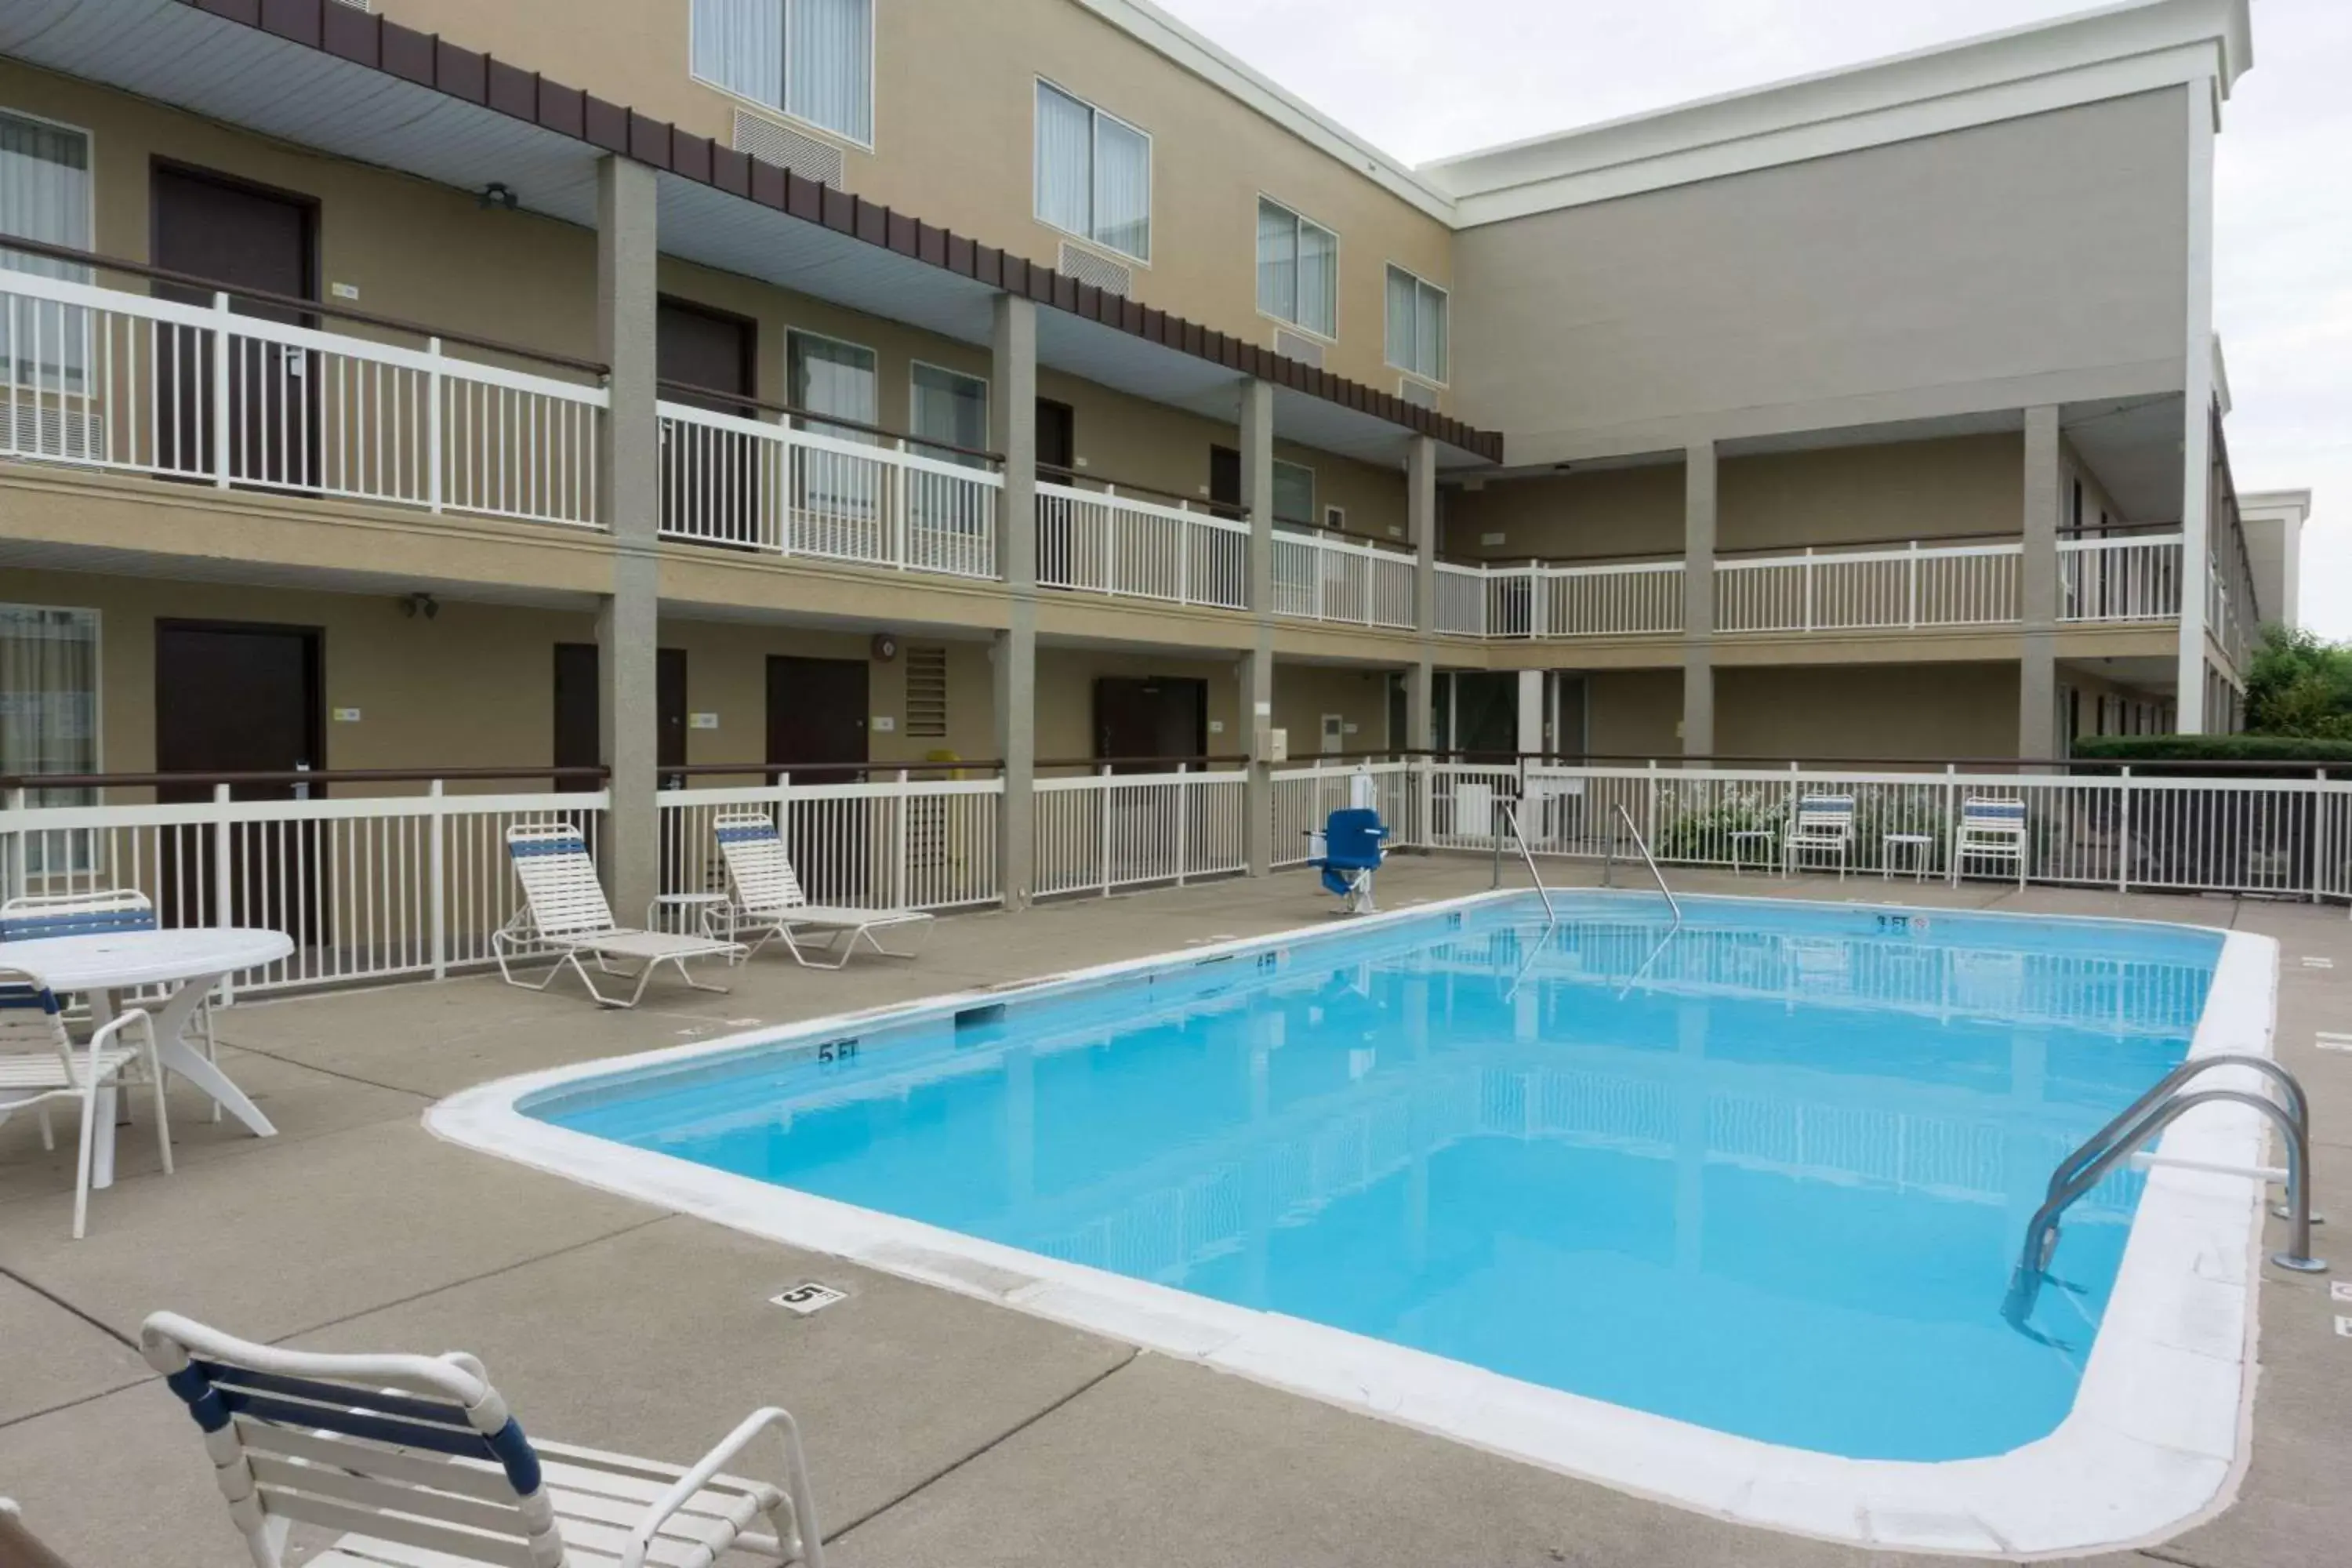 On site, Swimming Pool in Days Inn by Wyndham Florence Cincinnati Area